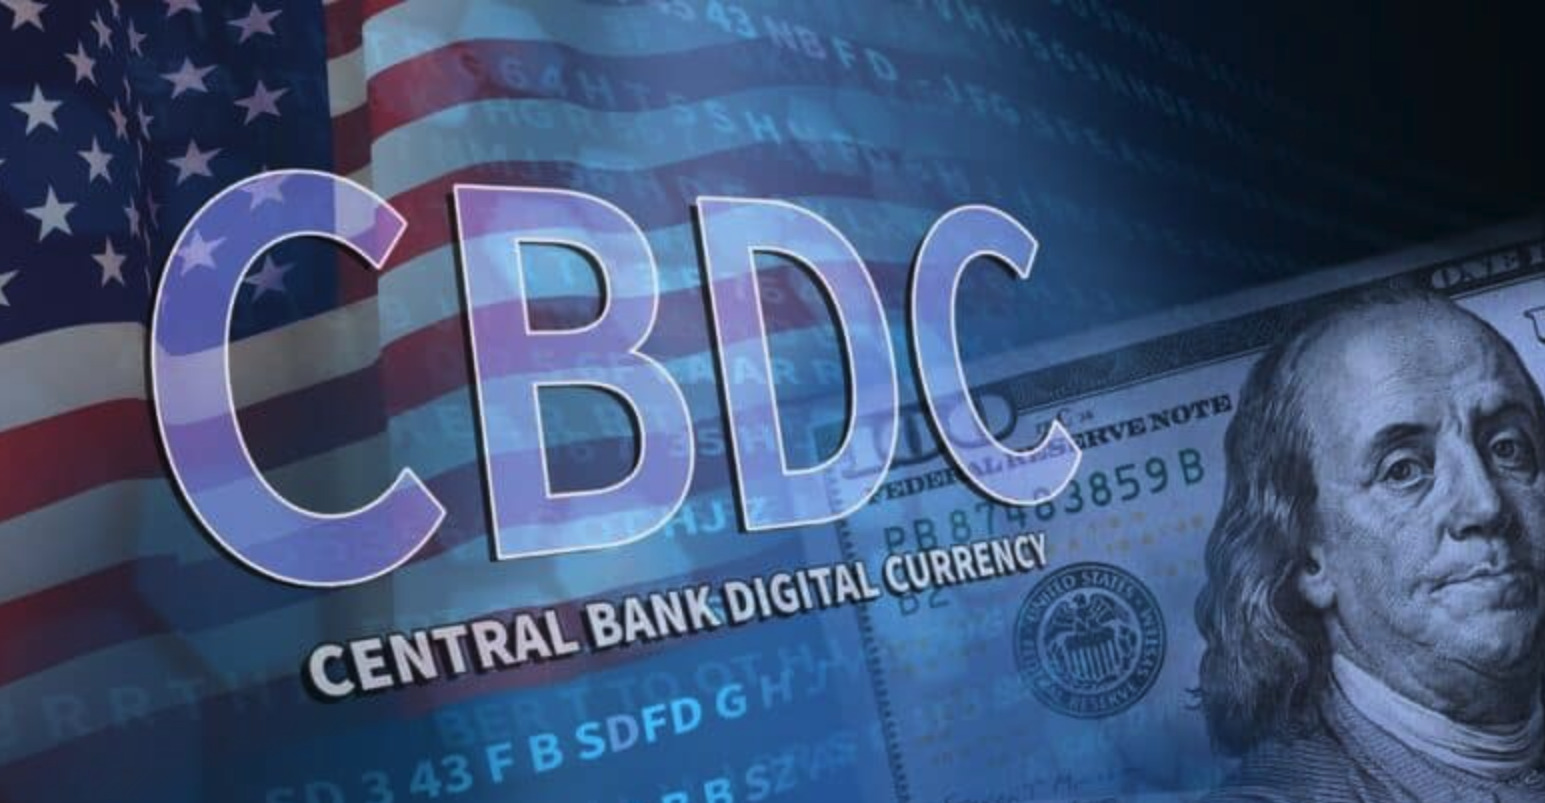 CBDC Central Bank Digital Currency logo on digital background. Business technology, financial, blockchain, exchange, money and digital asset. 3d illustration